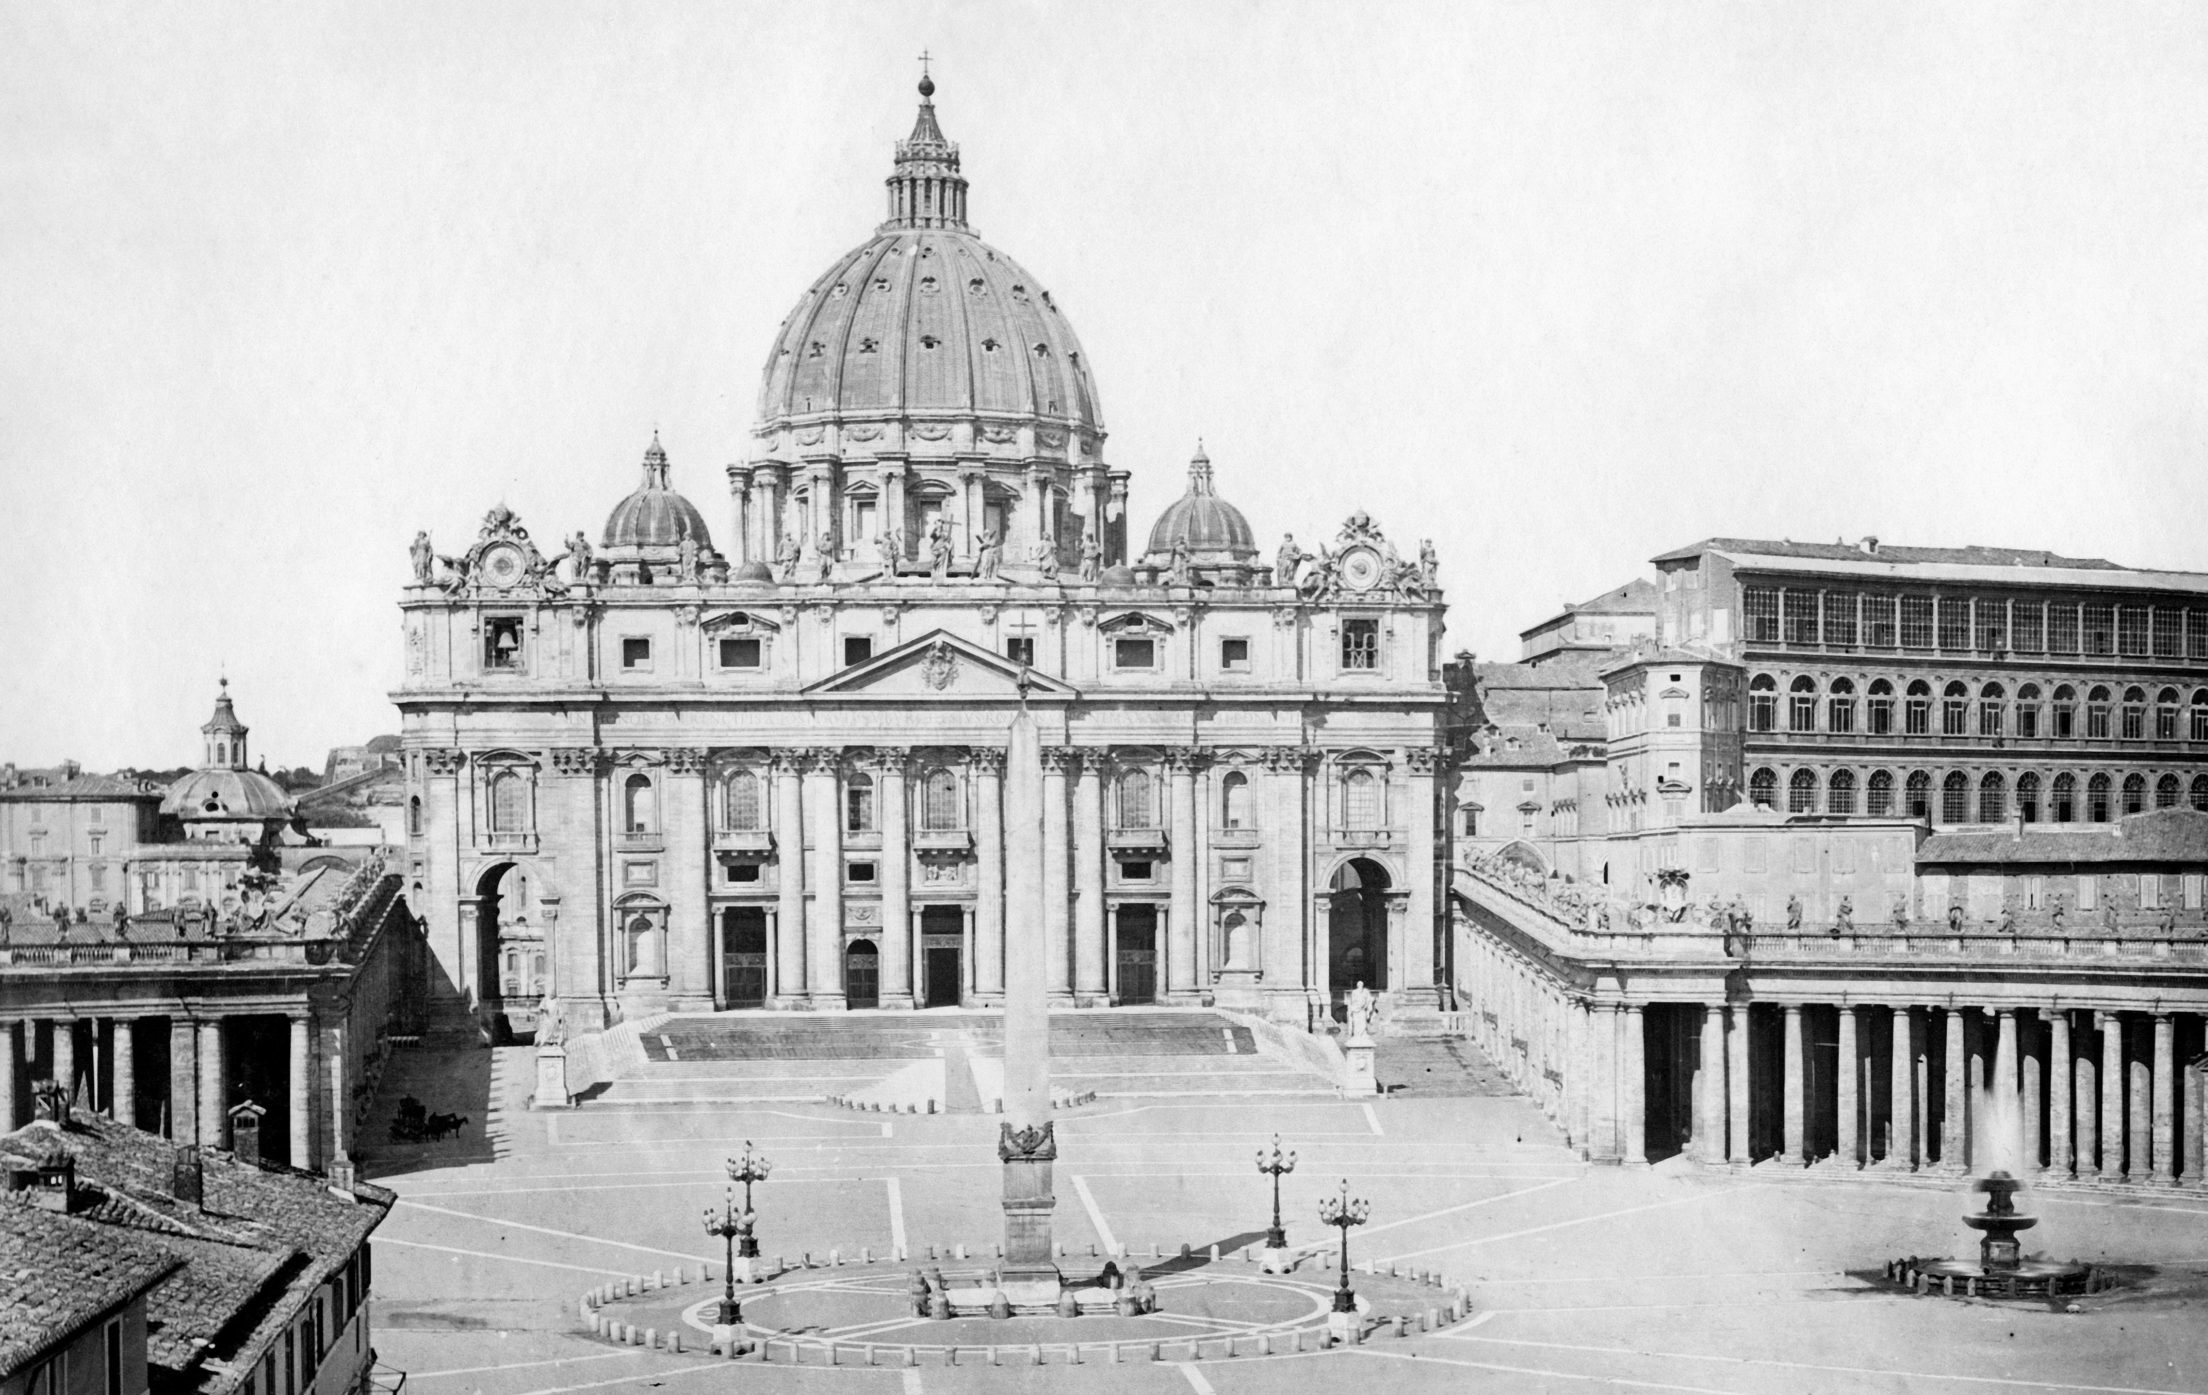 St Peter's Square, Rome, 20th century.